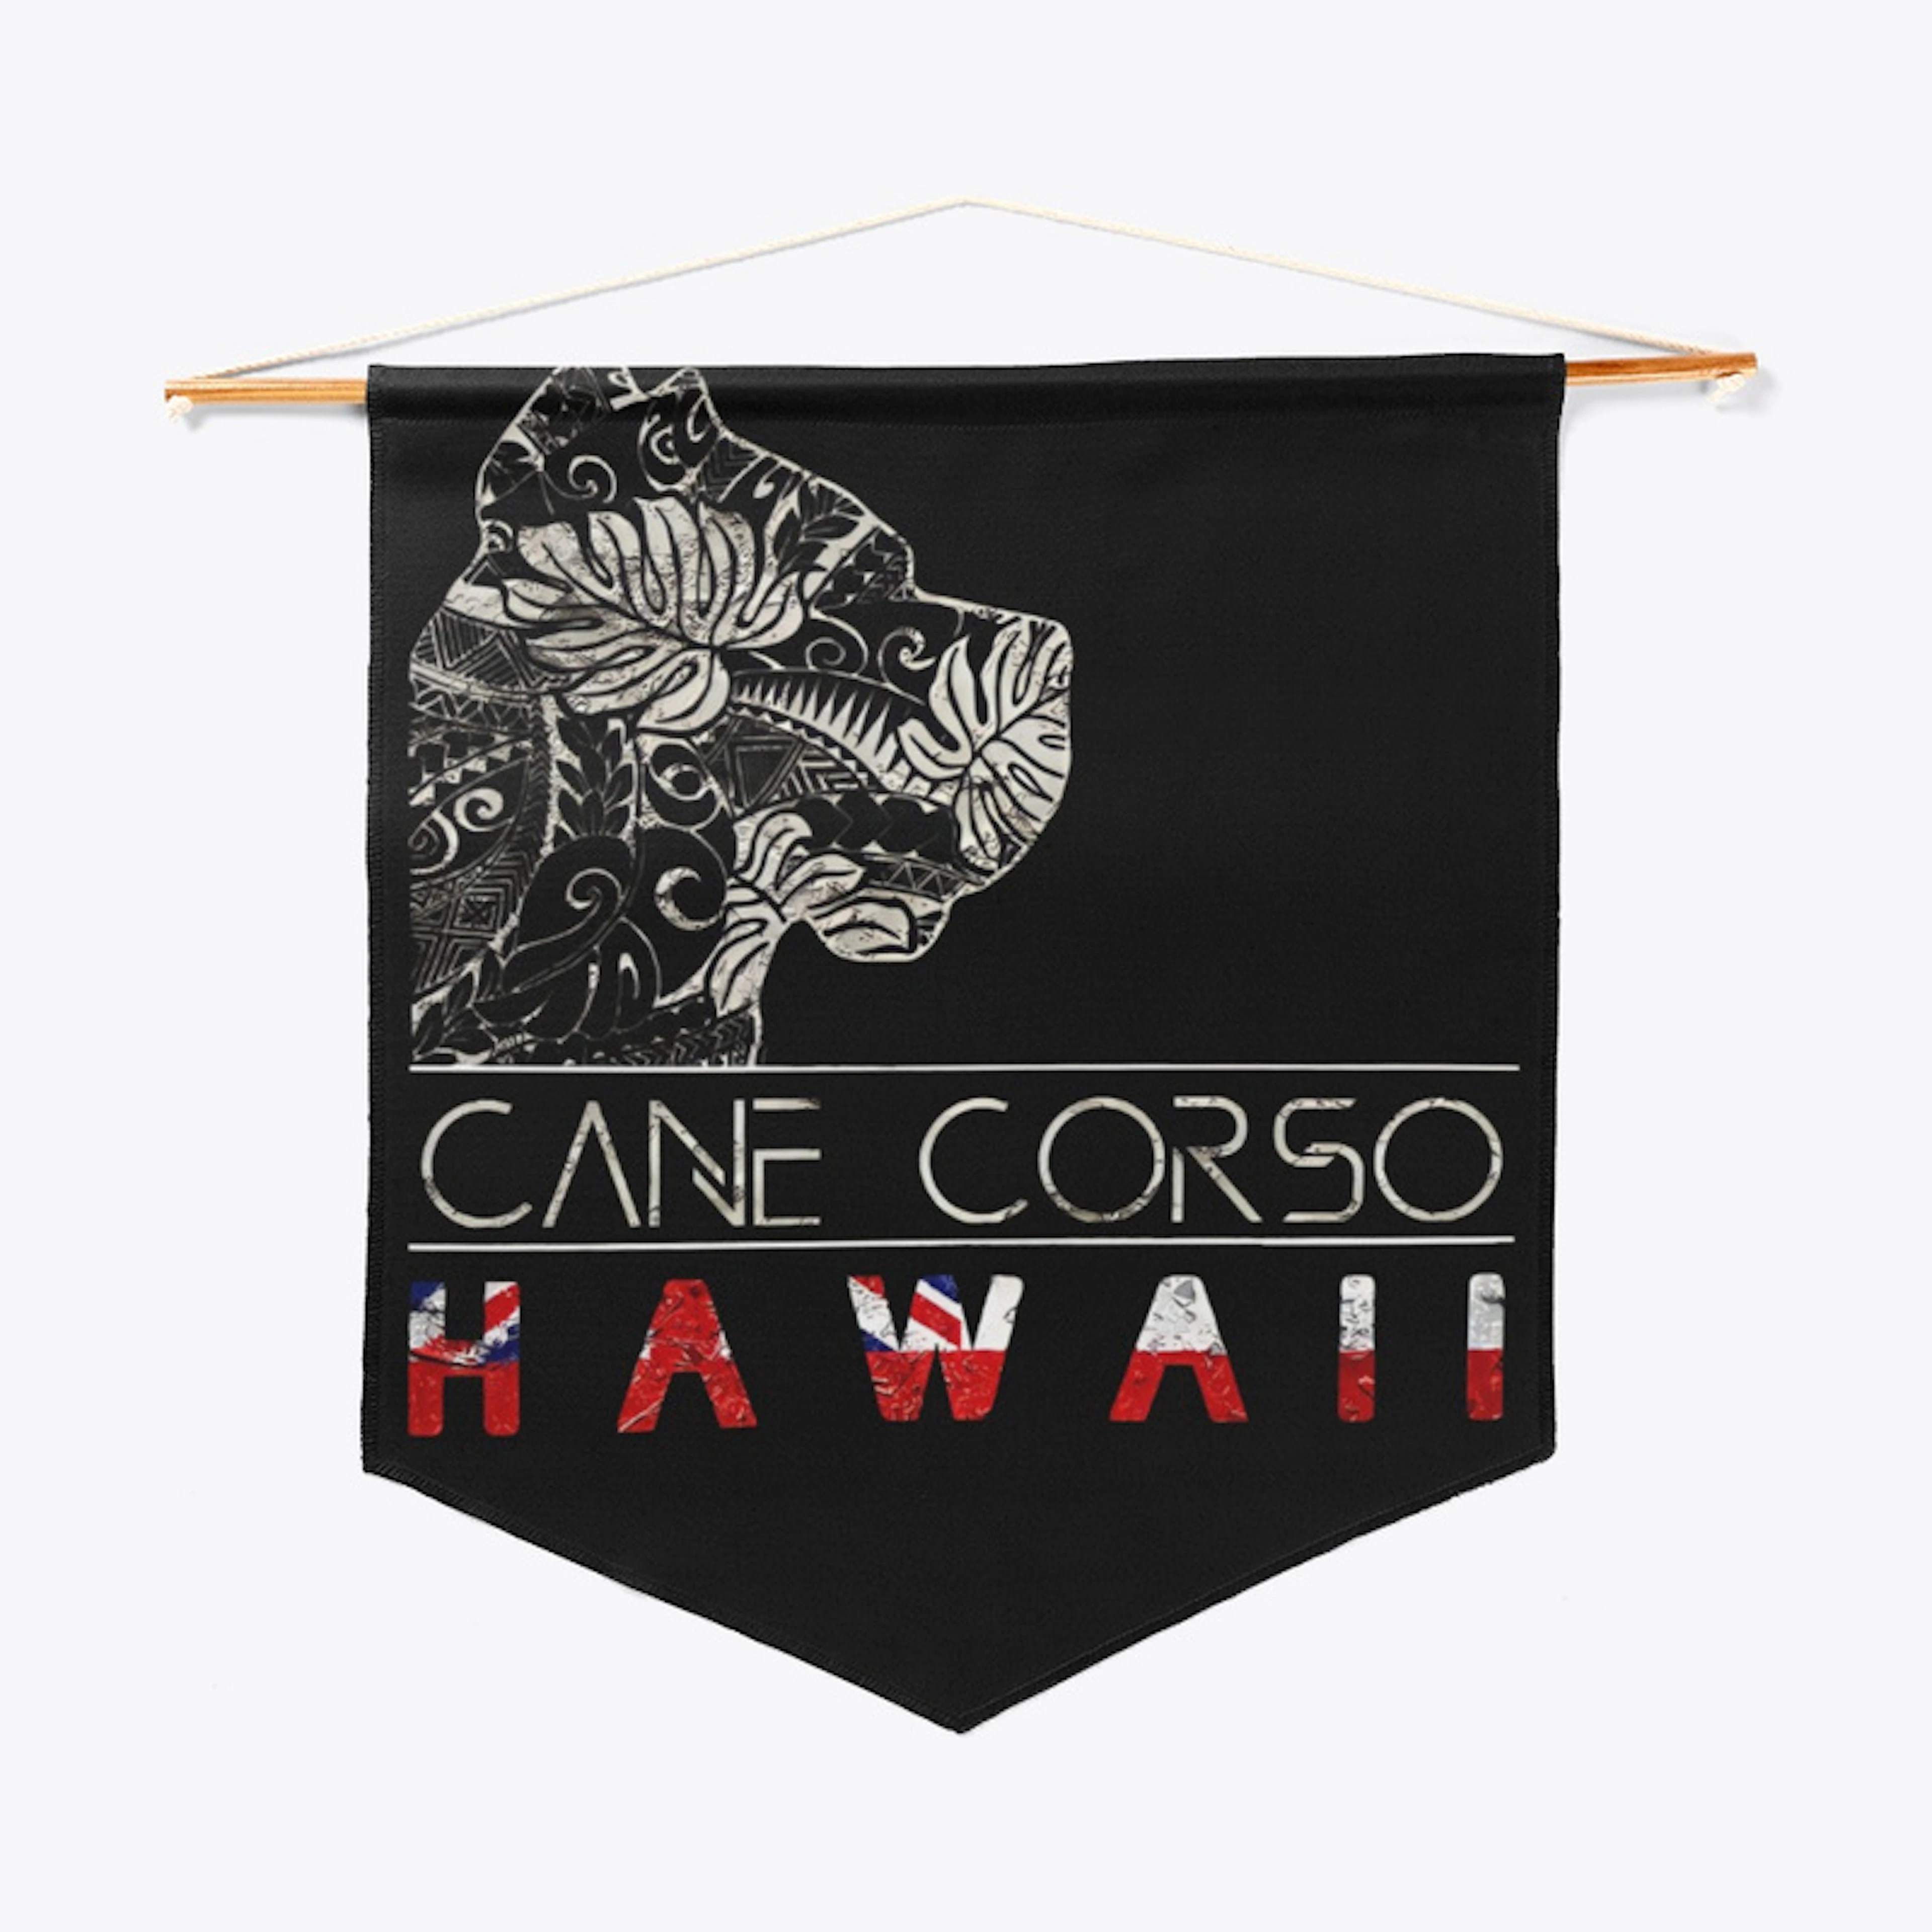 CANE CORSO HAWAII